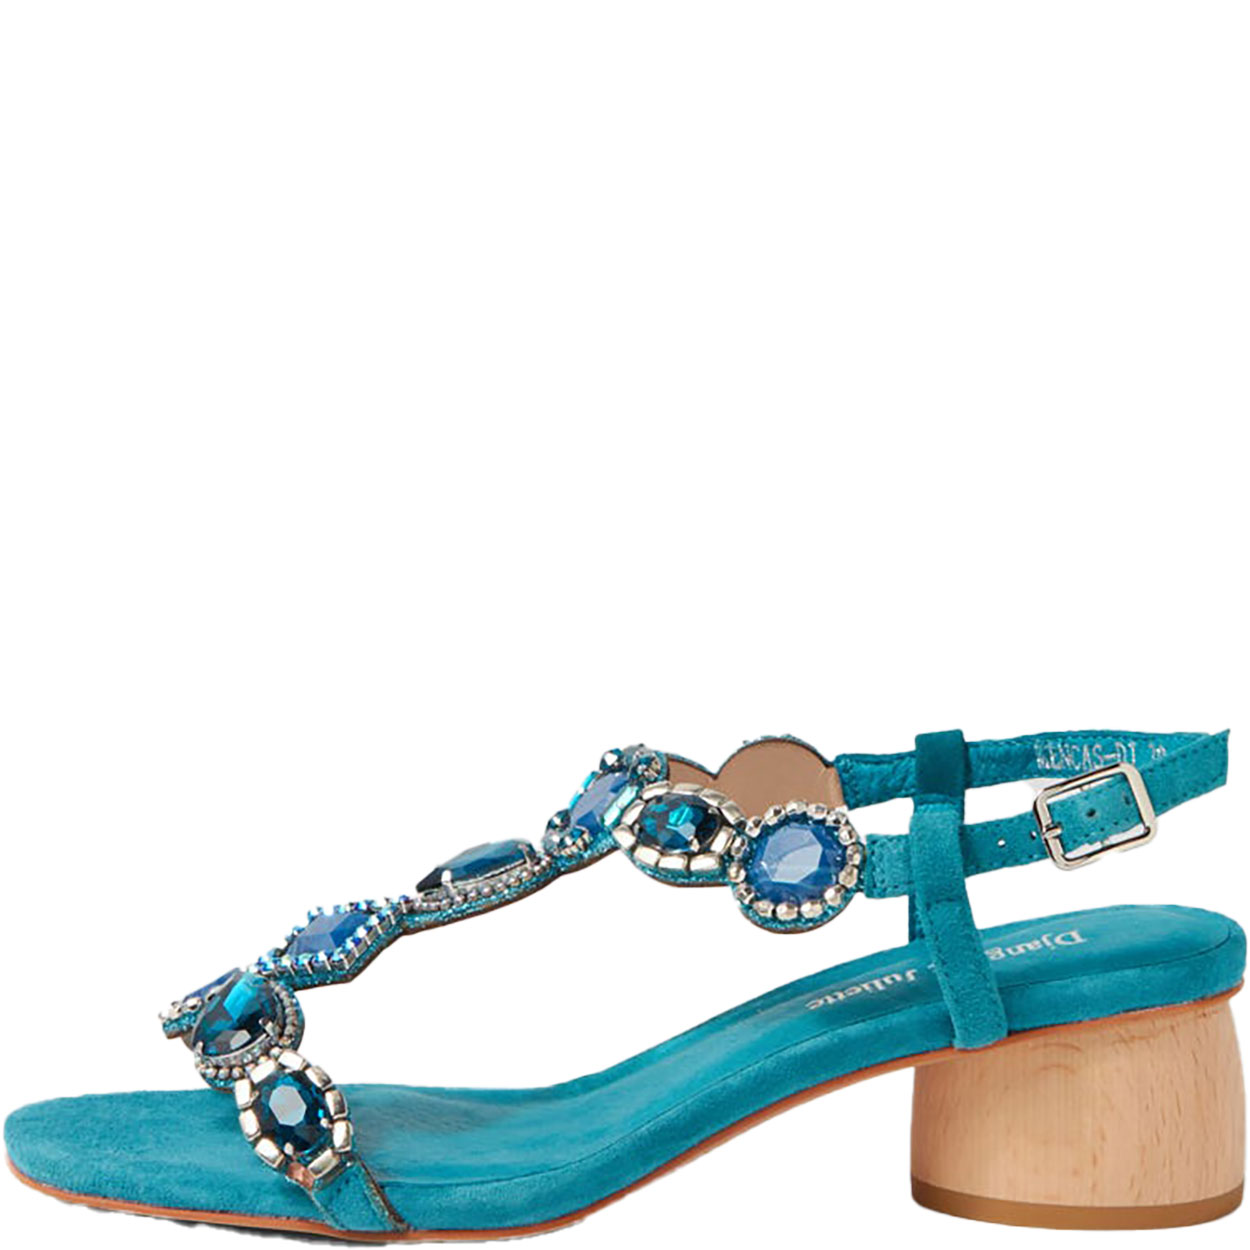 Mencas Sapphire Multi Suede Jewelled Sandals